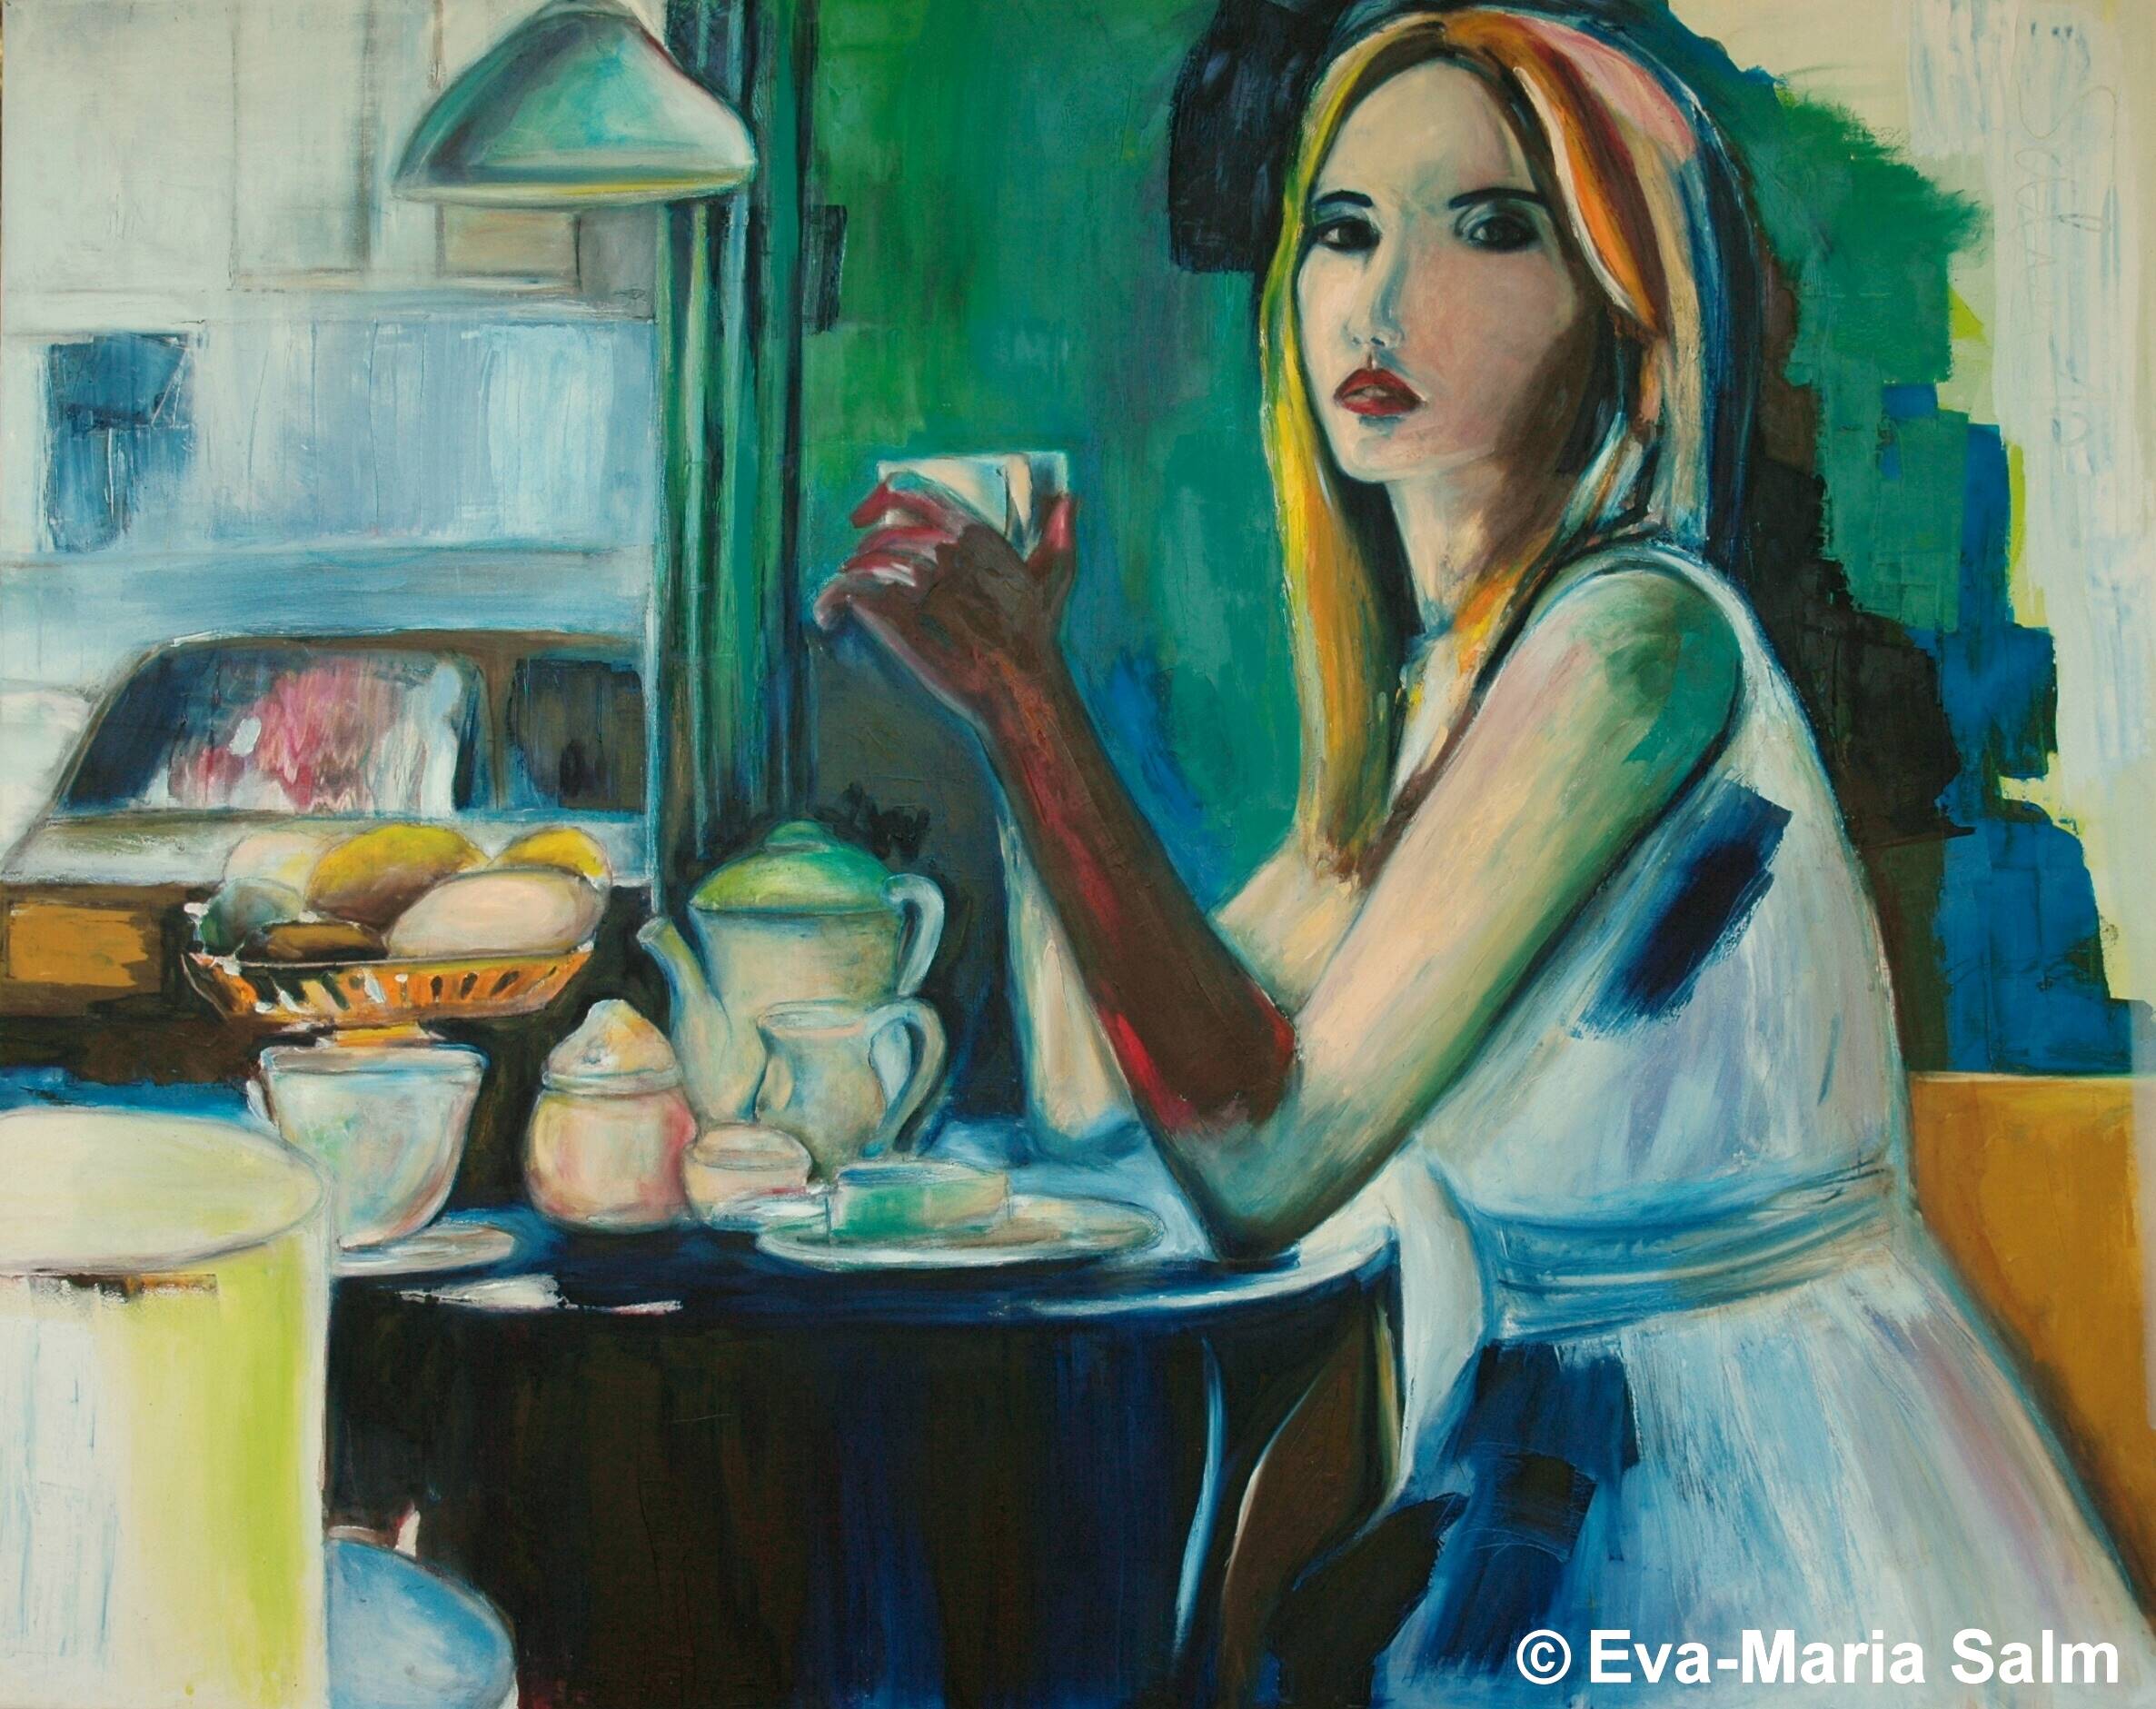 Eva-Maria Salm | Alberto | 2009 | Öl auf Leinwand | 120 x 80 cm